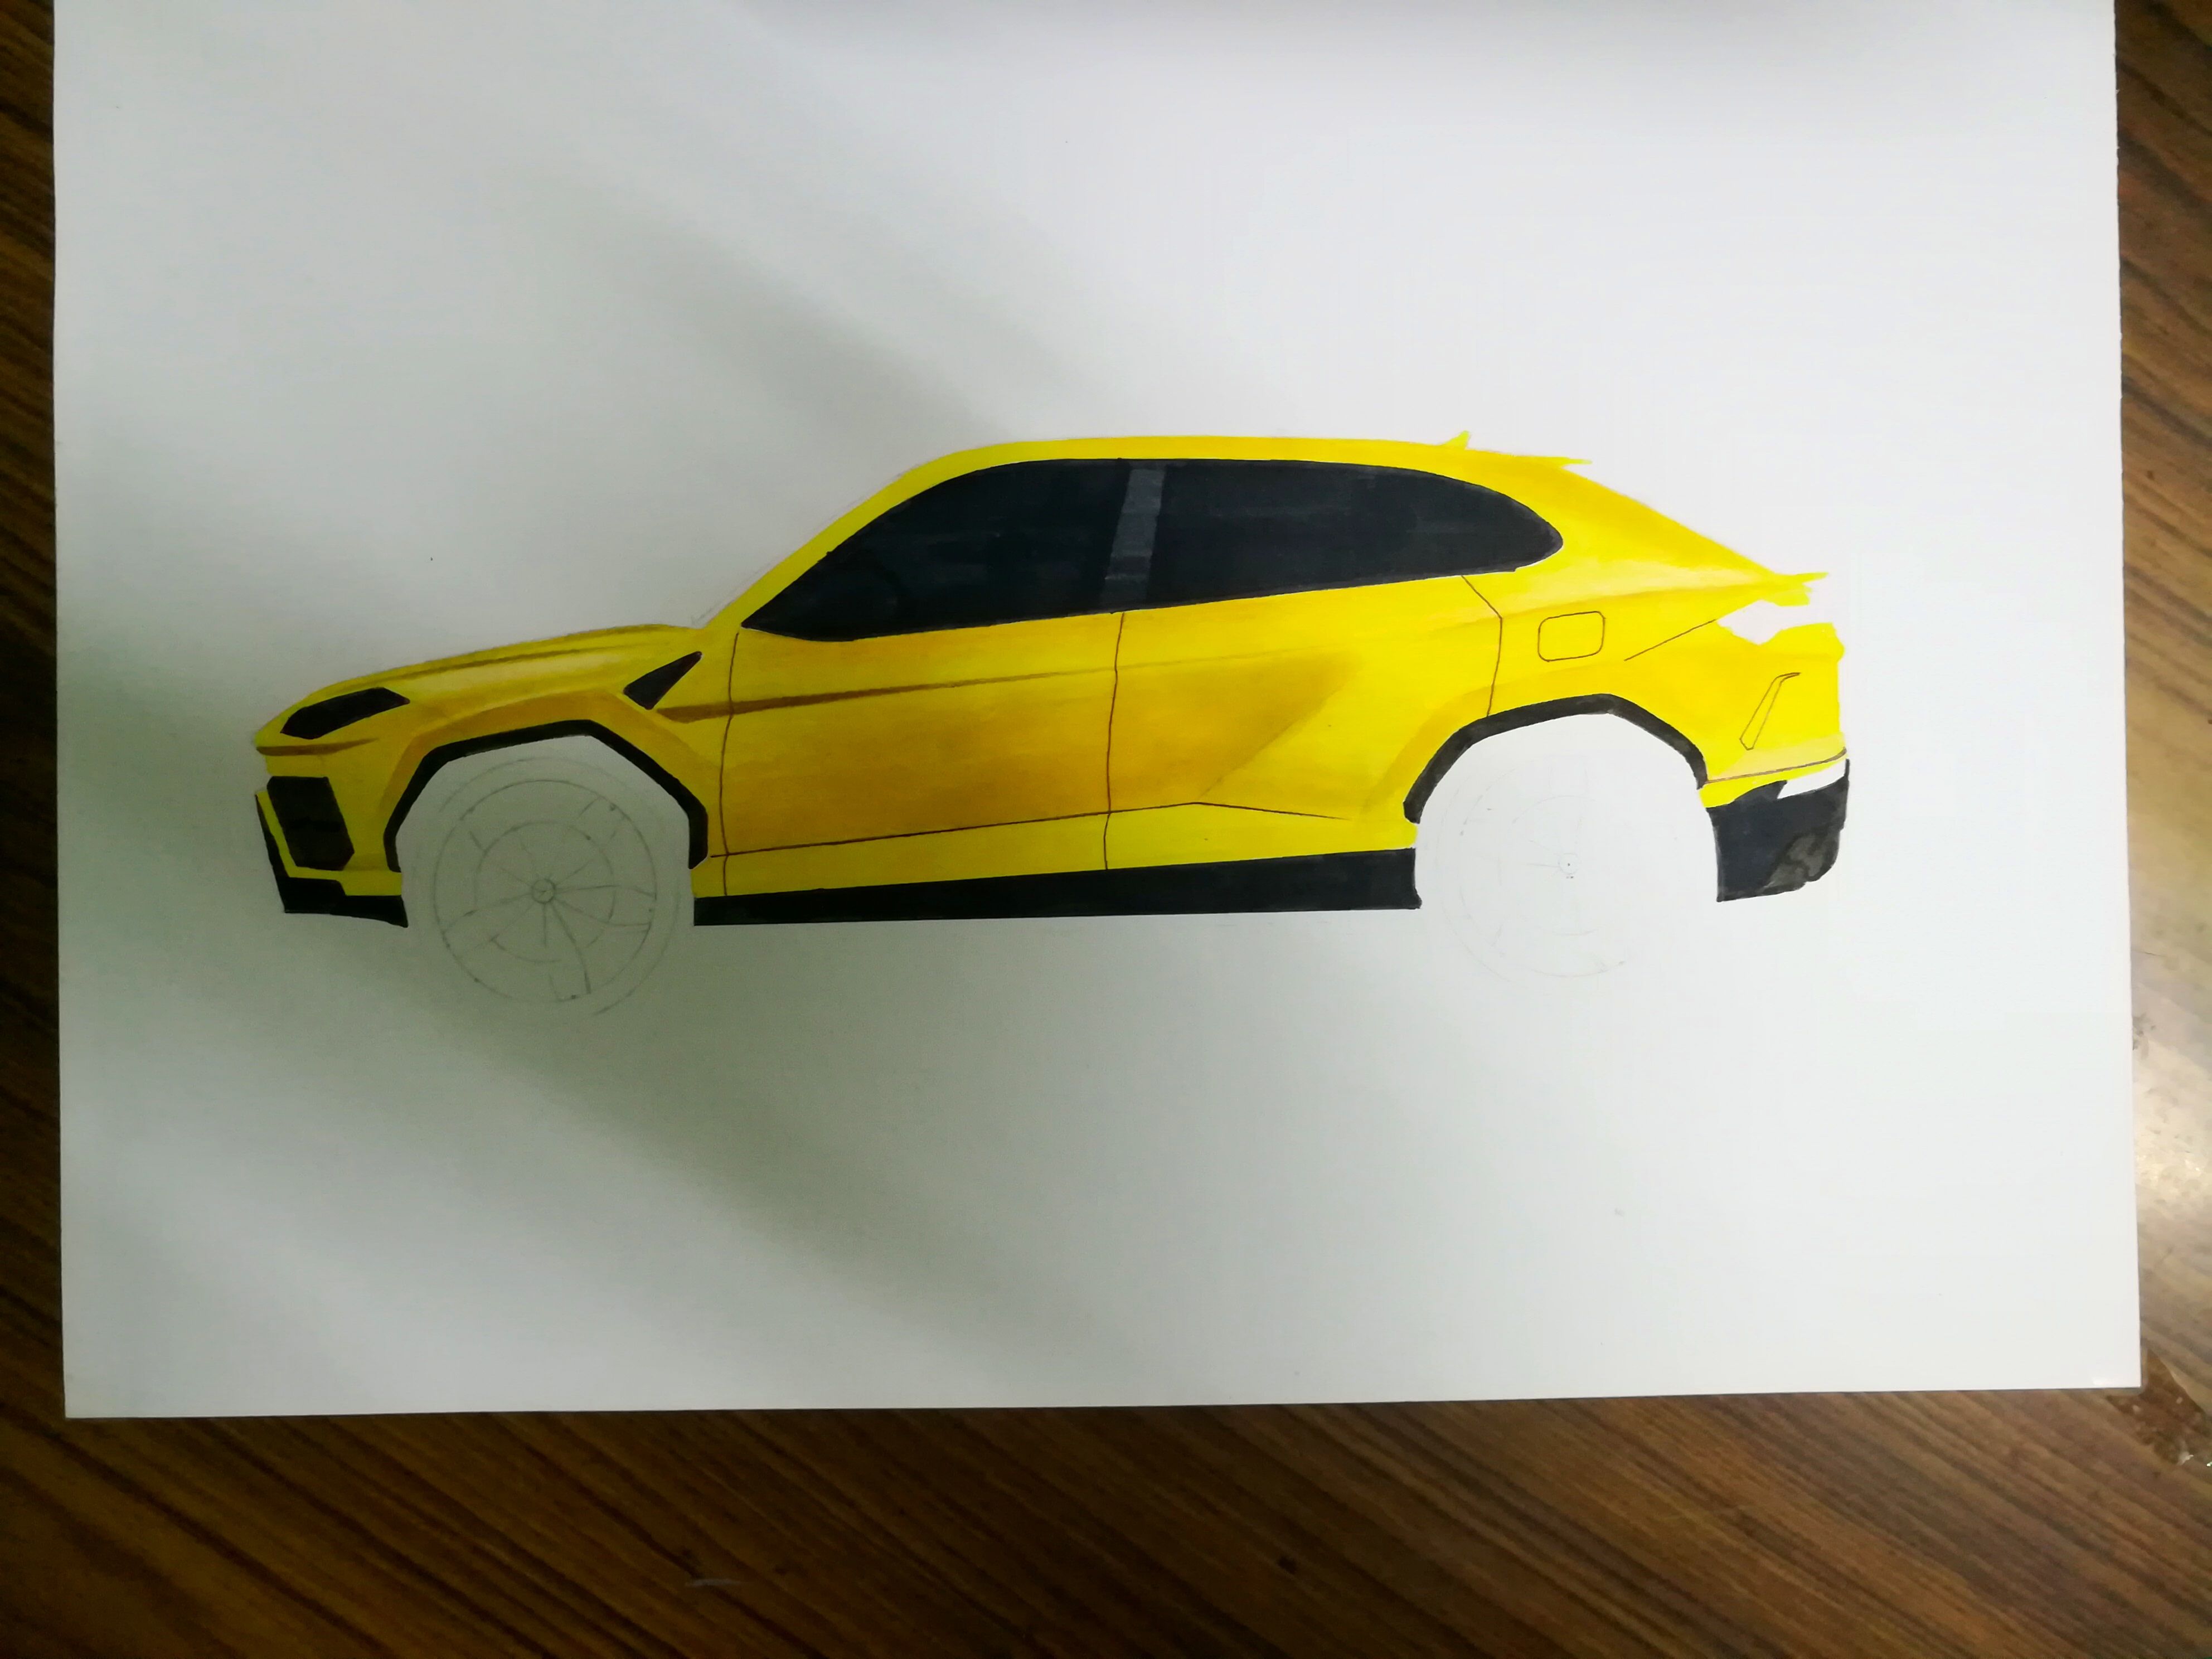 How to draw a car - Lamborghini Urus - Step by step - YouTube